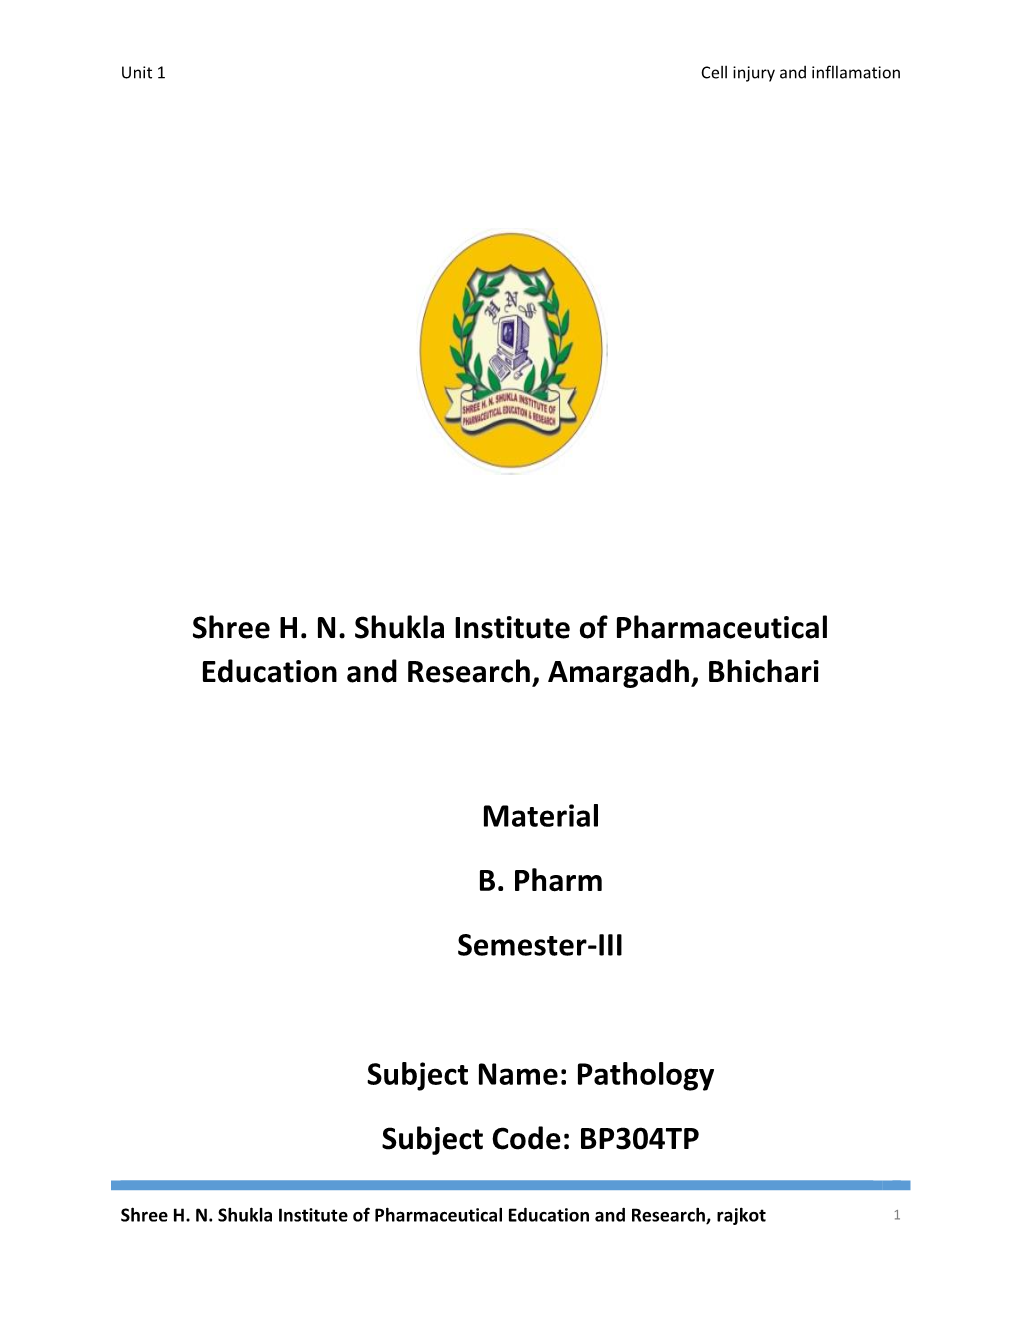 Shree H. N. Shukla Institute of Pharmaceutical Education and Research, Amargadh, Bhichari